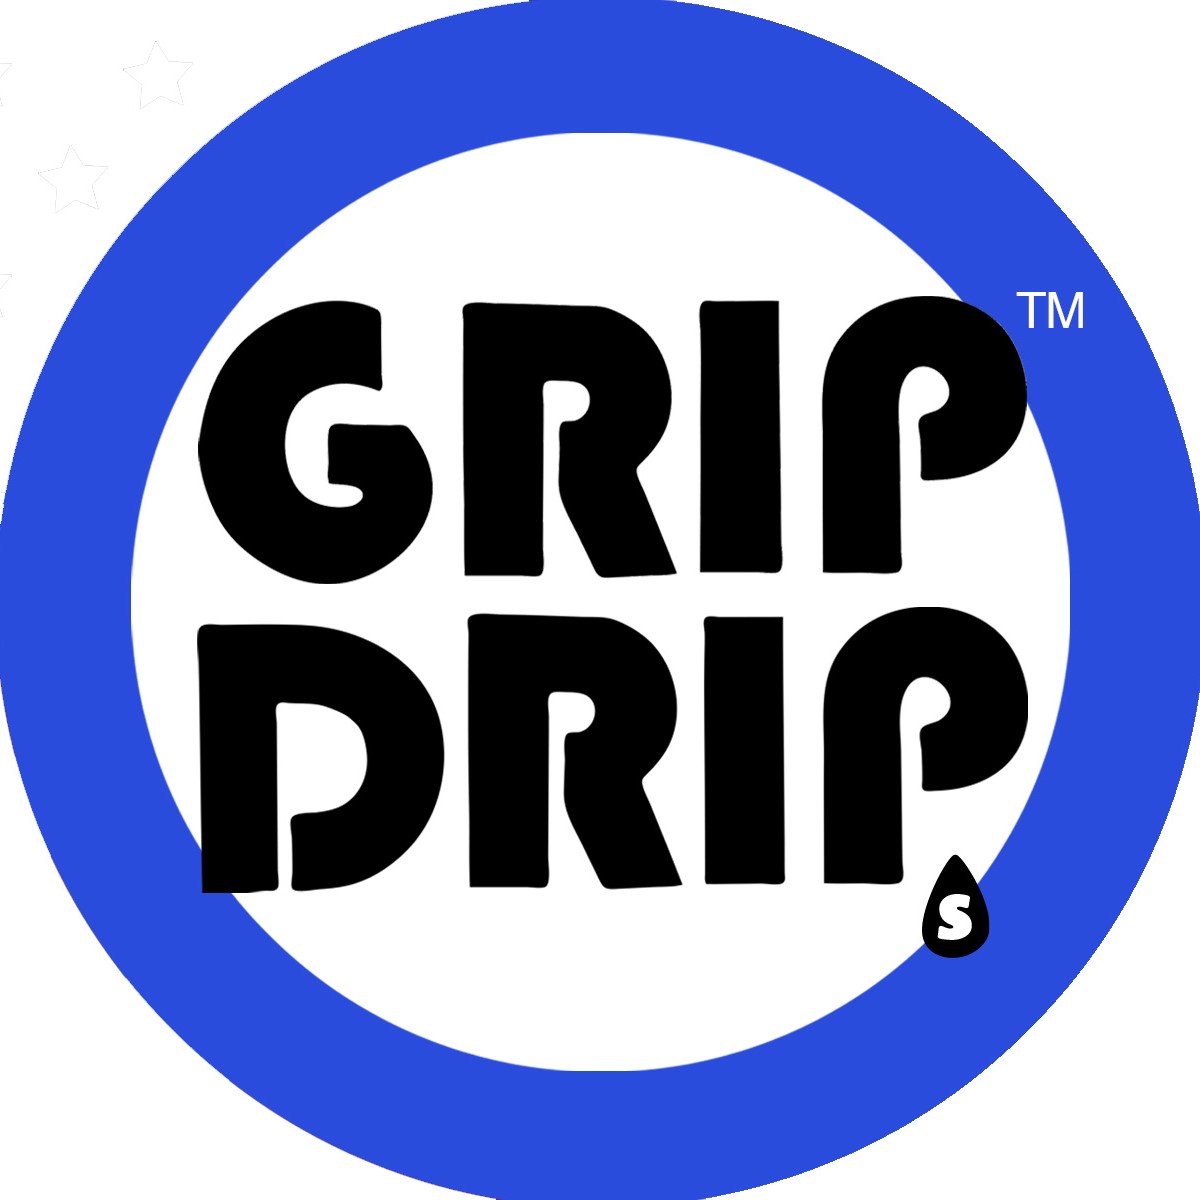 Grip Drips